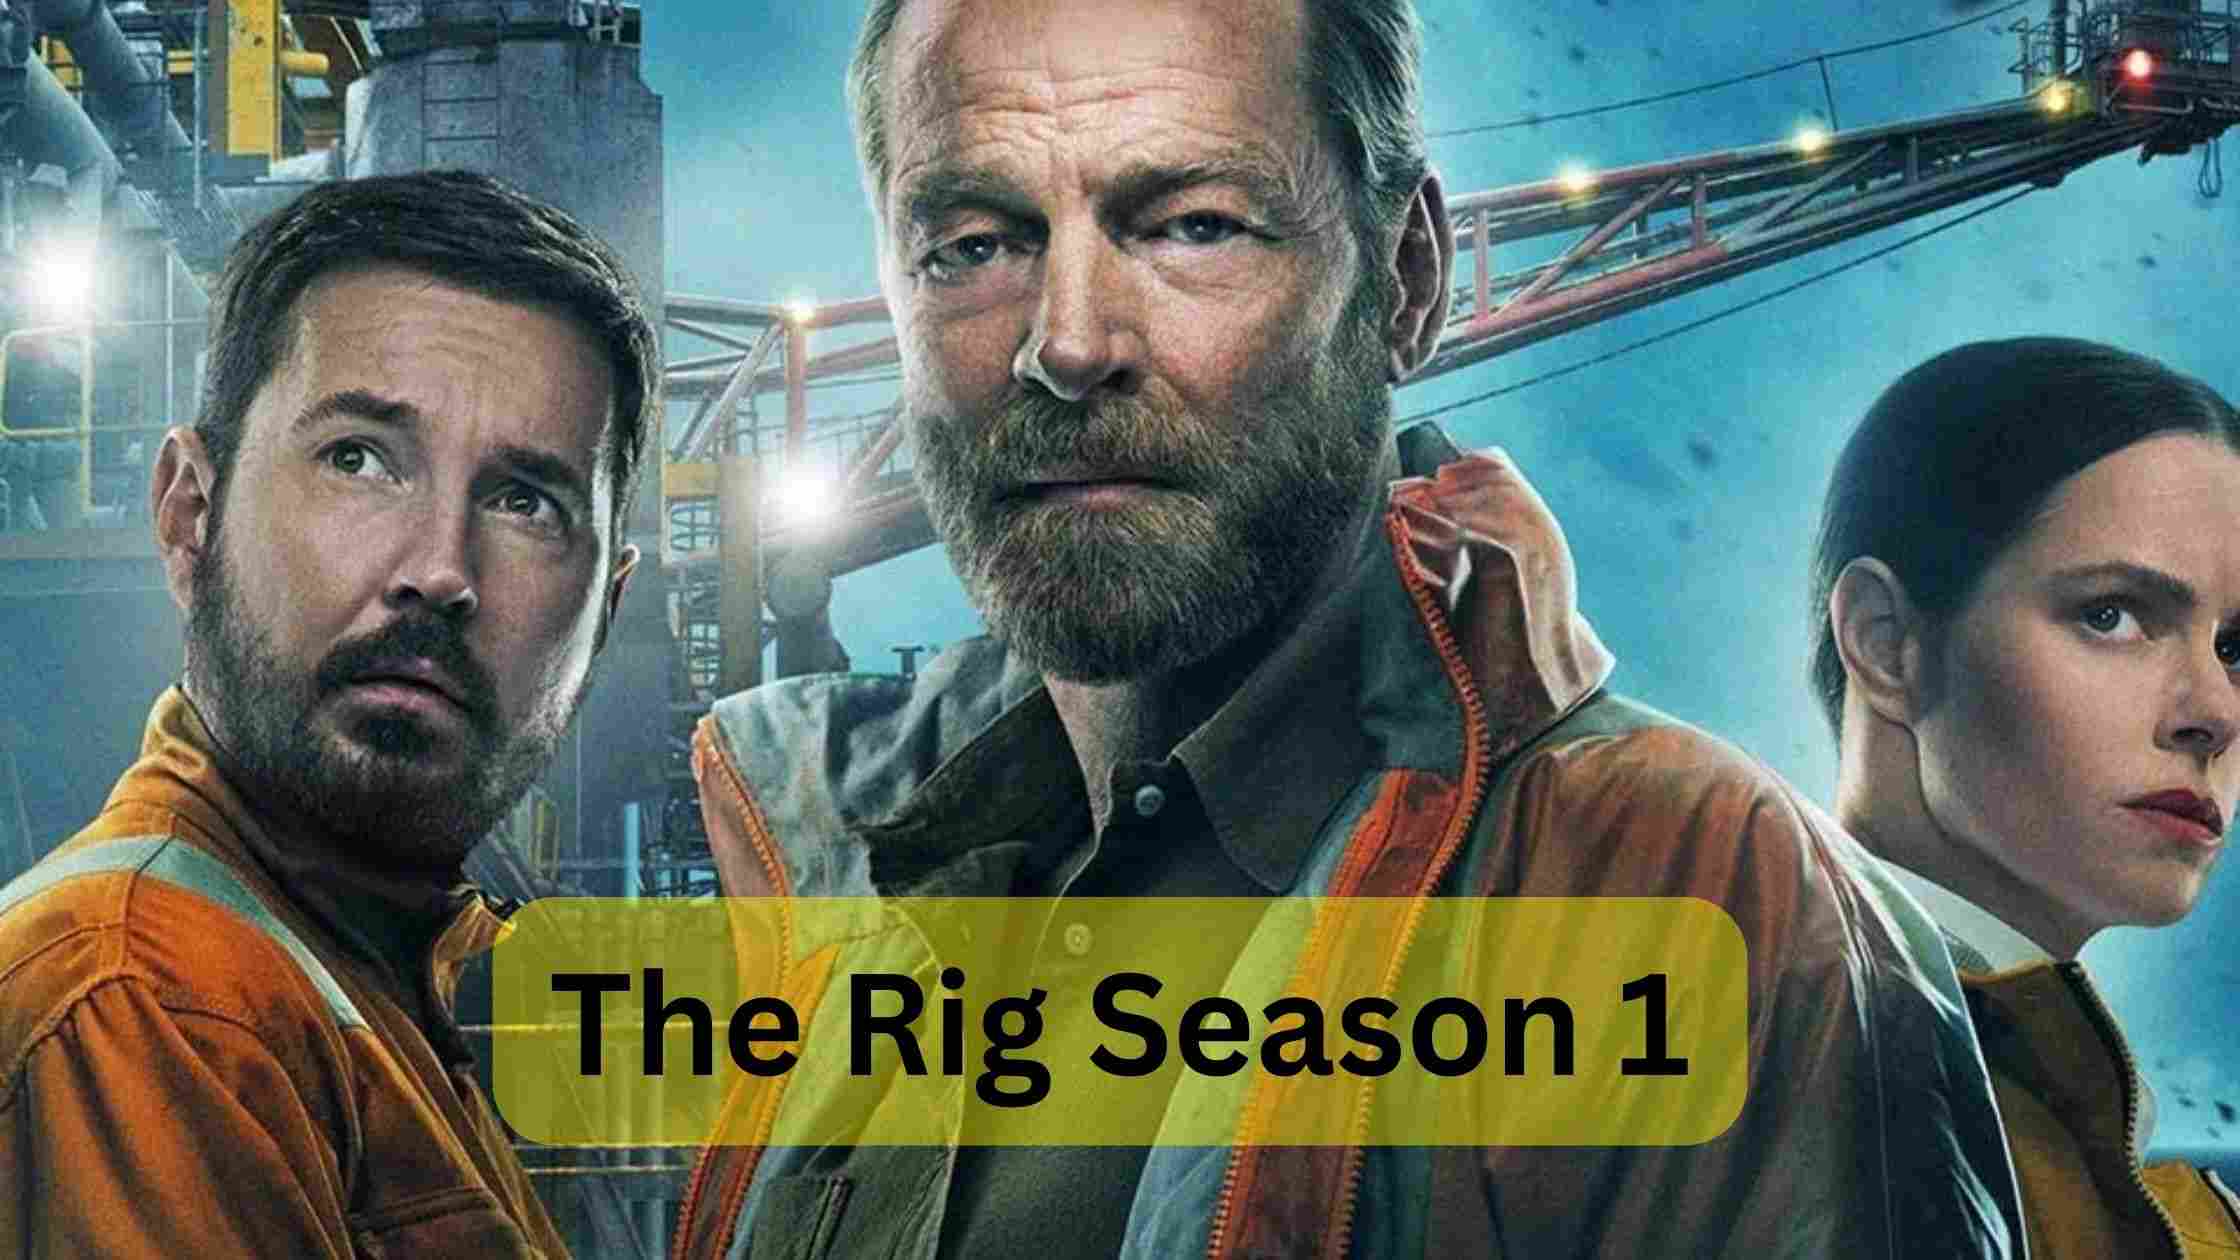 The Rig Season 1 Episodes list